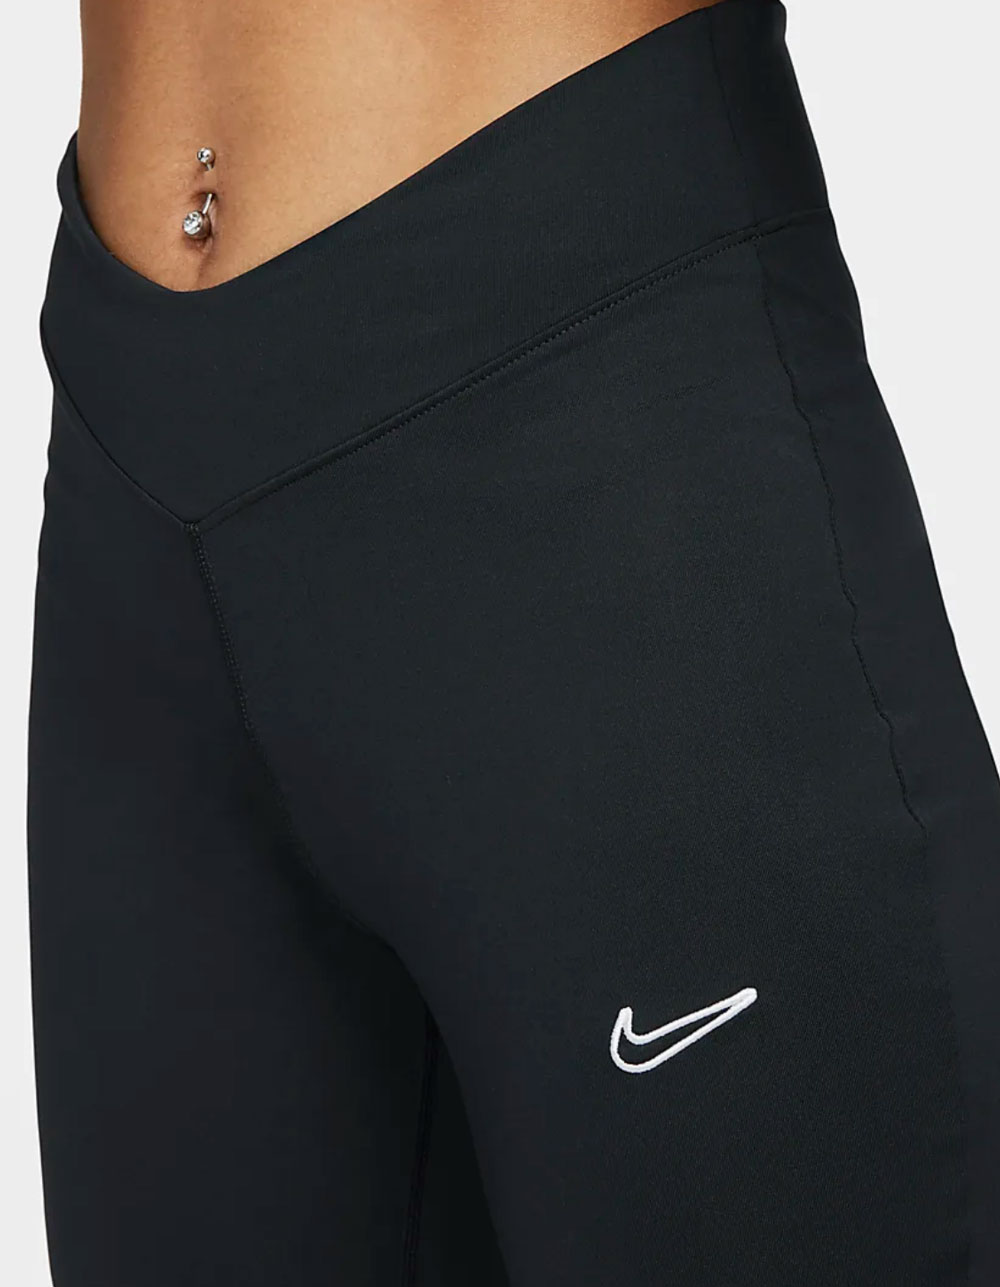 Nike Running GO Dri-FIT high impact mid rise leggings in black